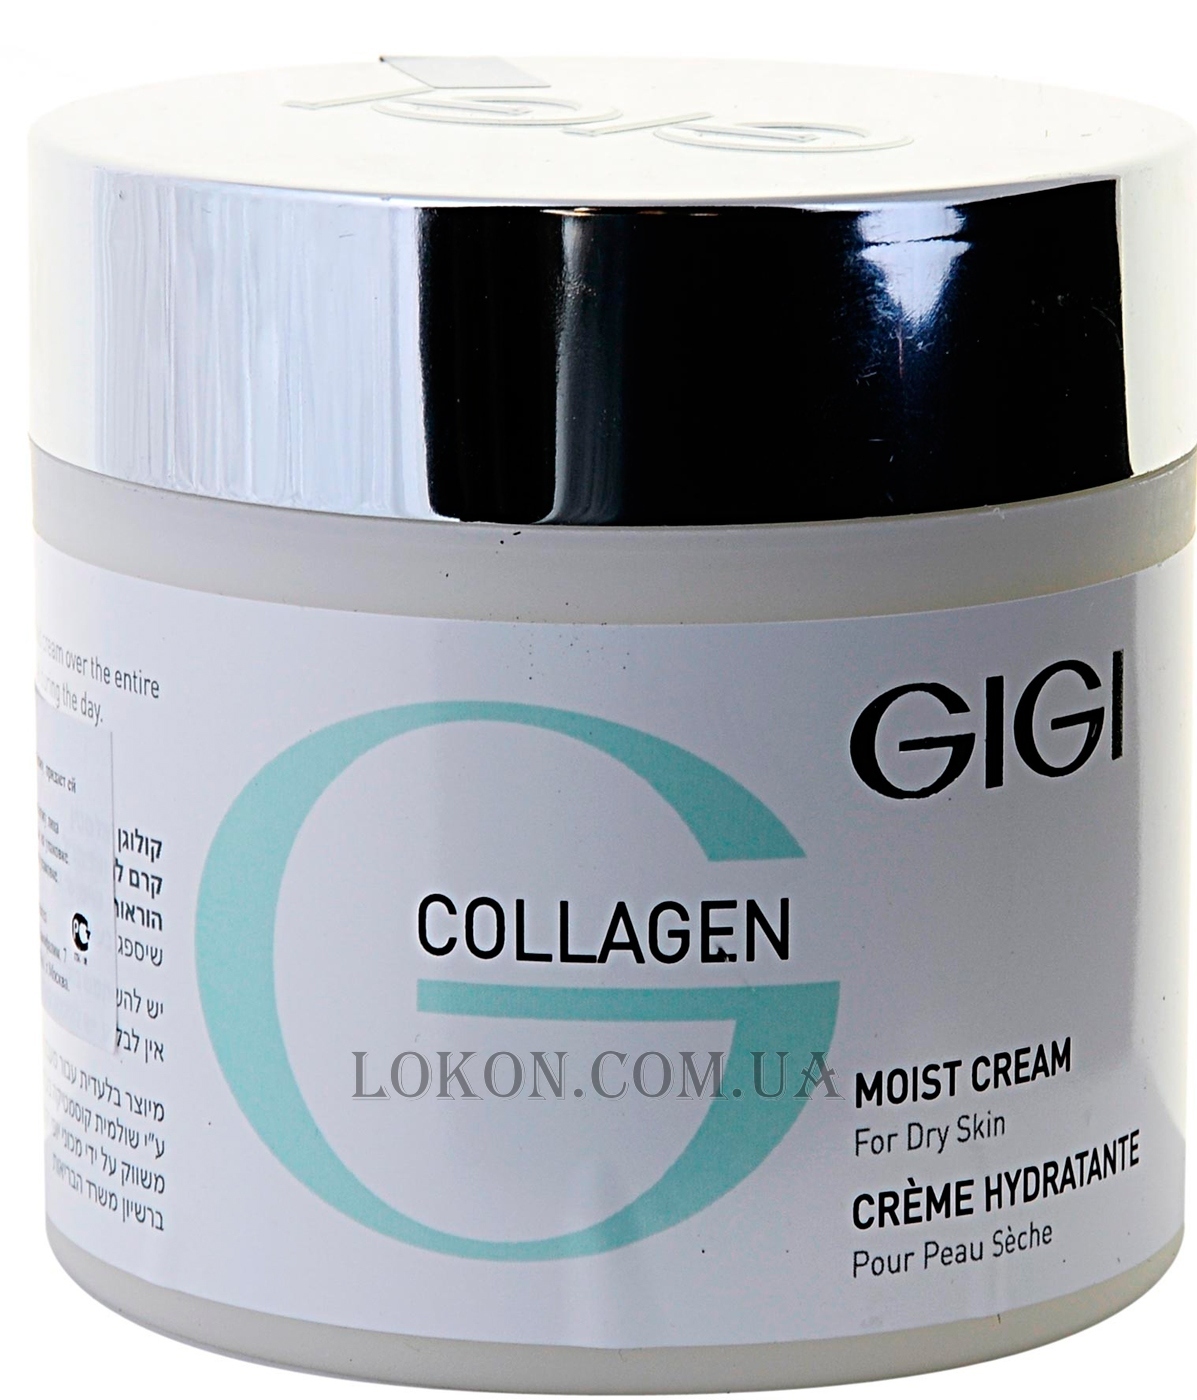 GIGI Collagen Elastin Moisturizer - Увлажняющий крем